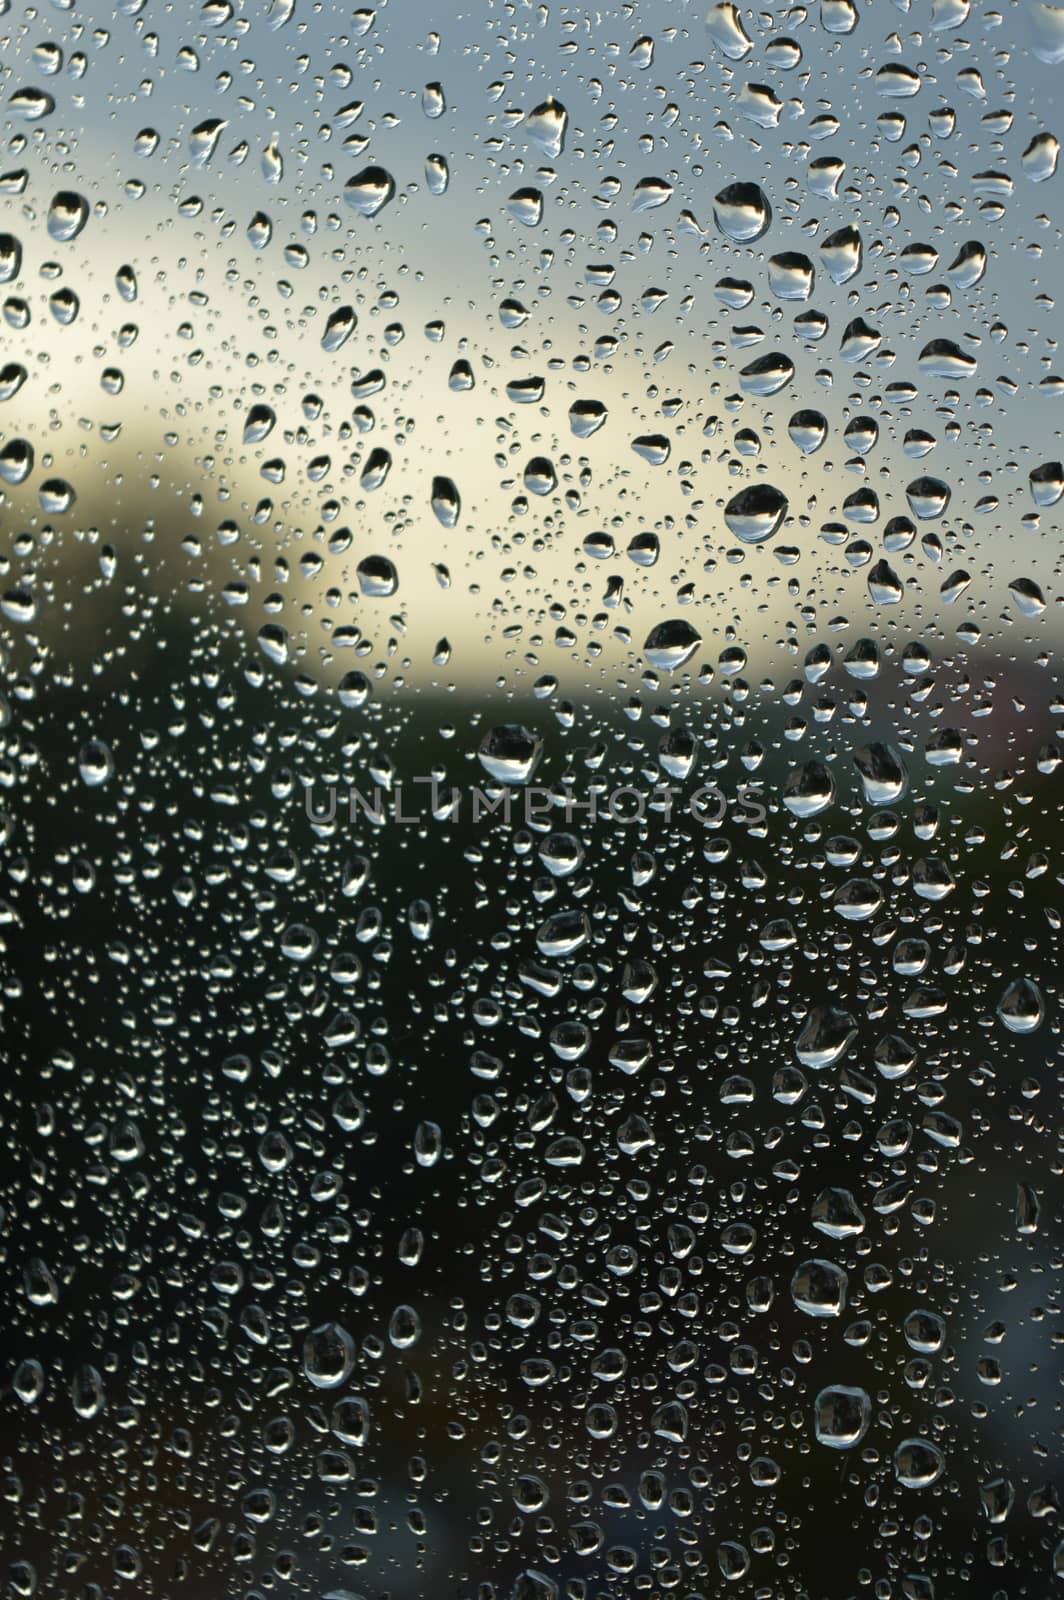 Drops of rain on the window by sergpet